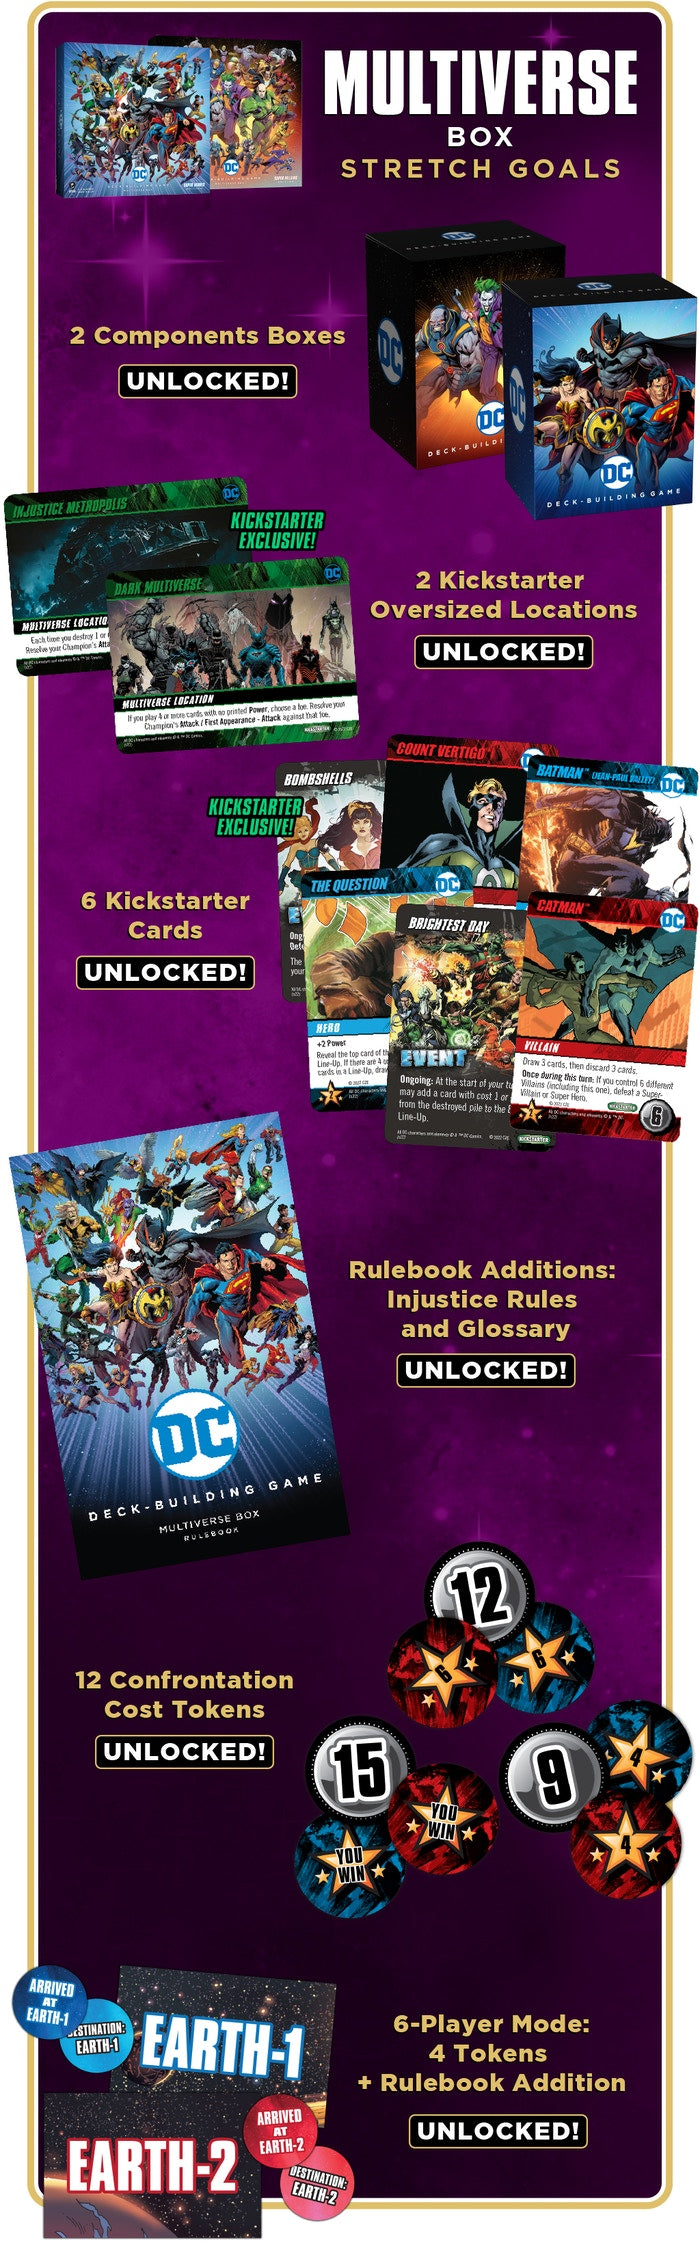 Boîte multivers de construction de deck DC (Kickstarter)